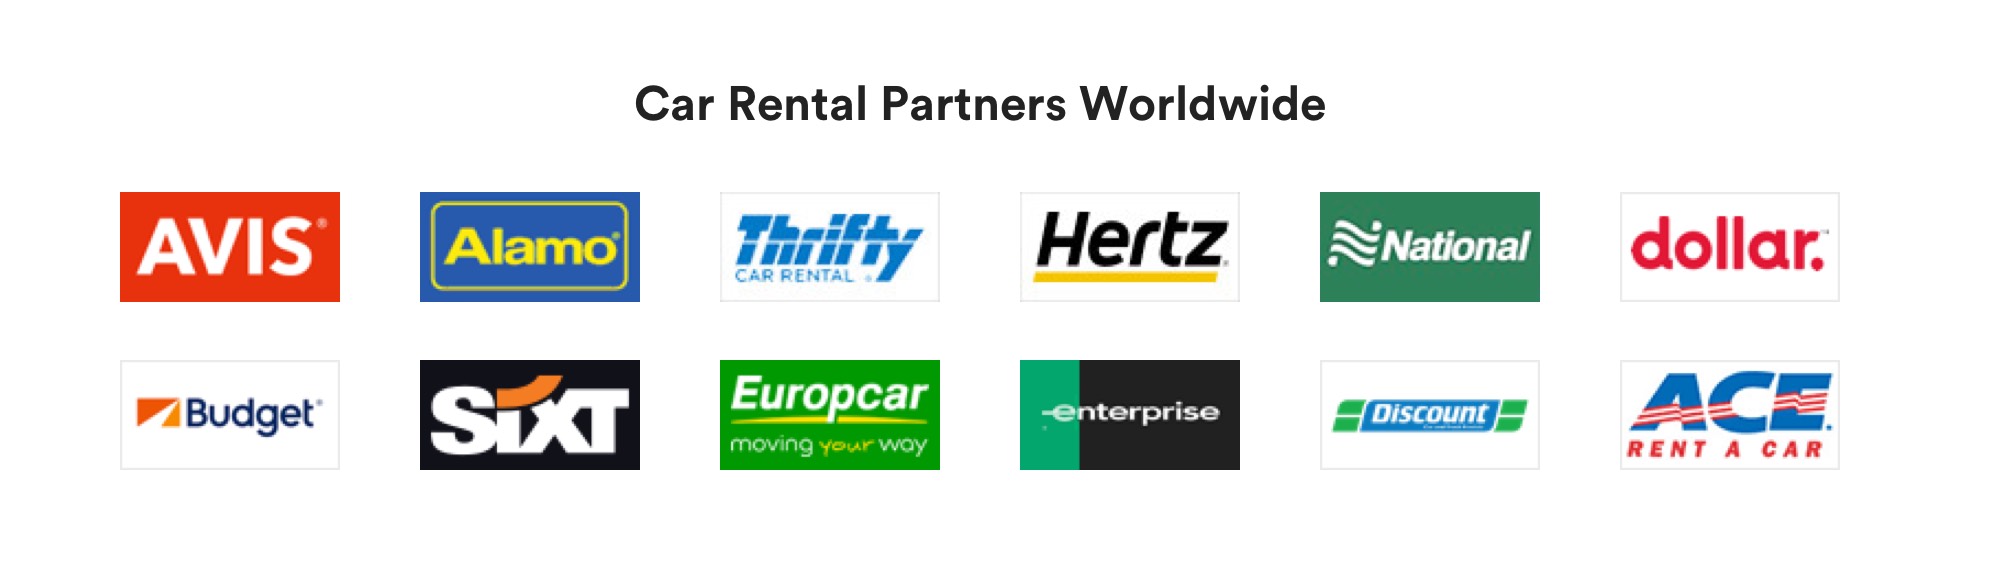 Car Rental Partners Worldwide